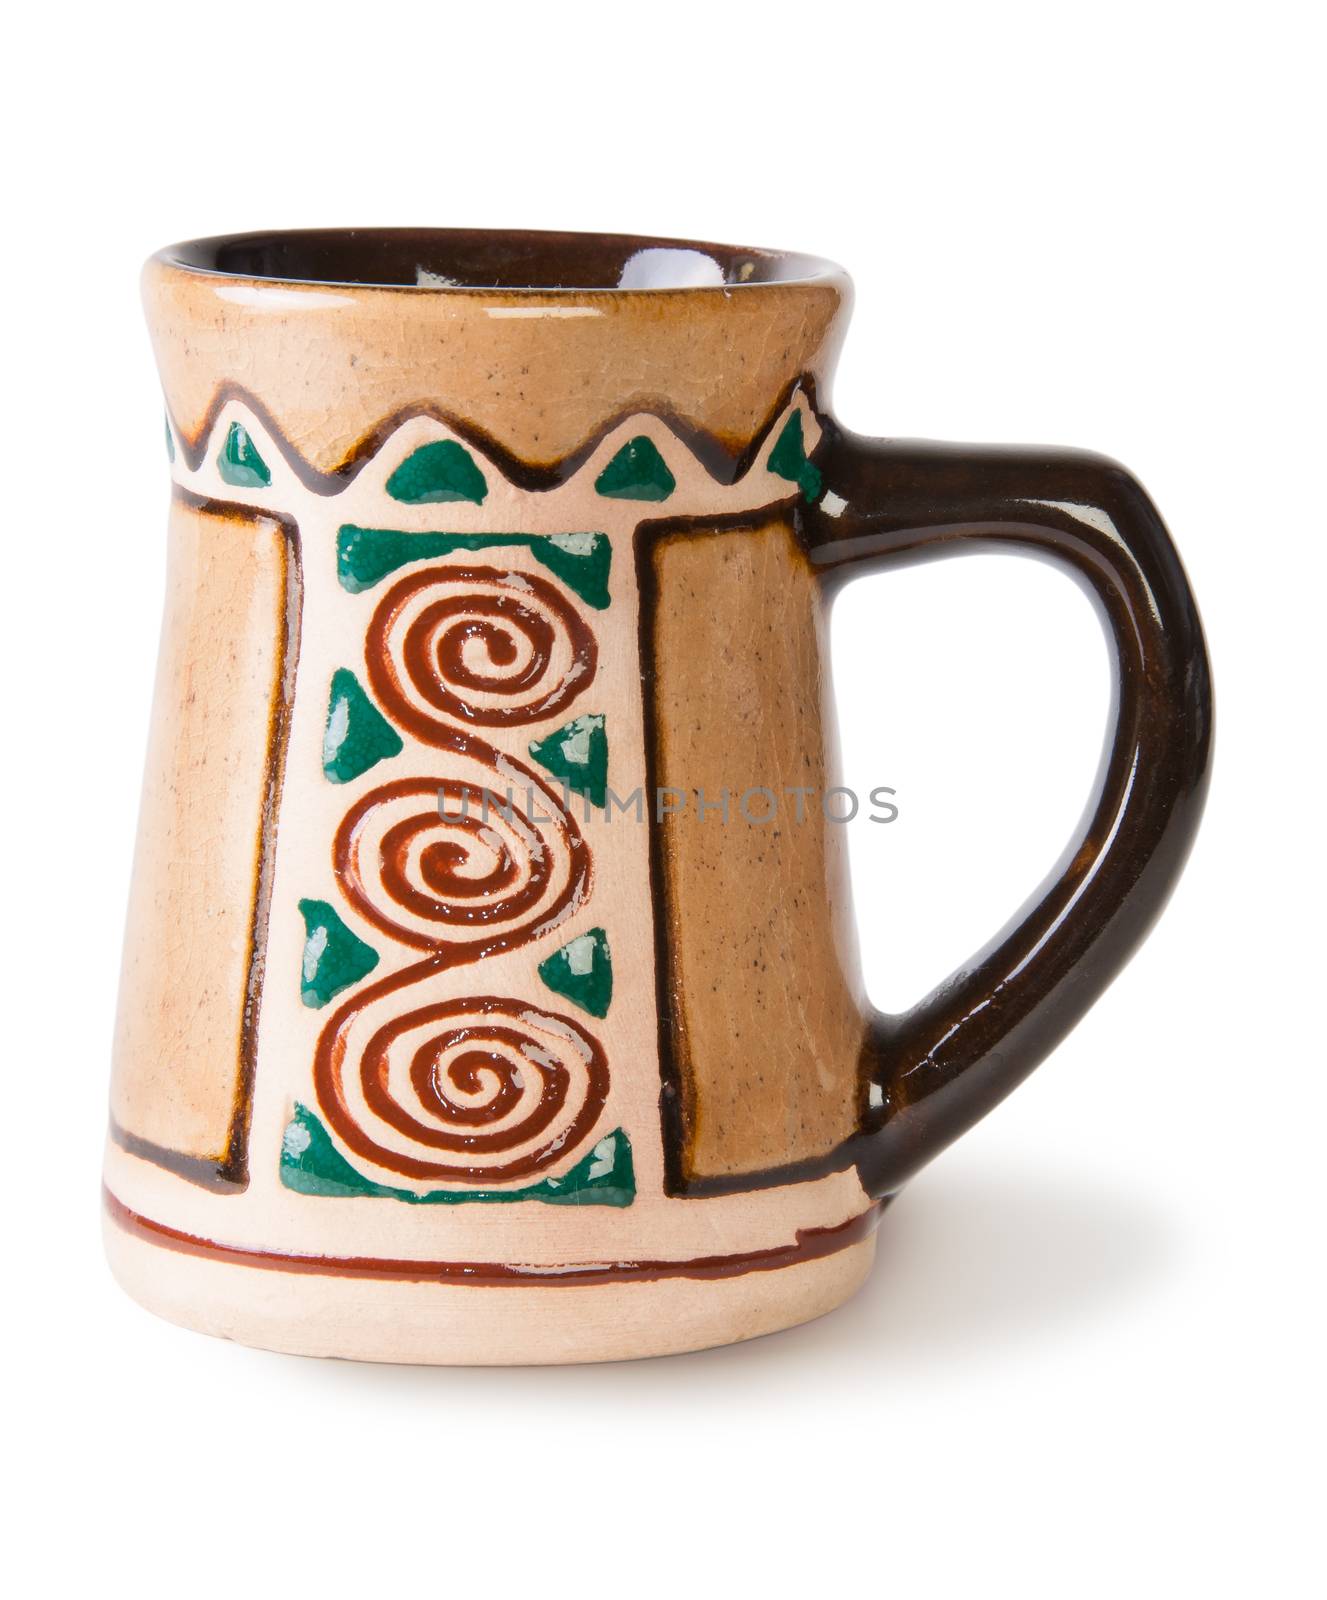 Old Ceramic Beer Mug by Cipariss